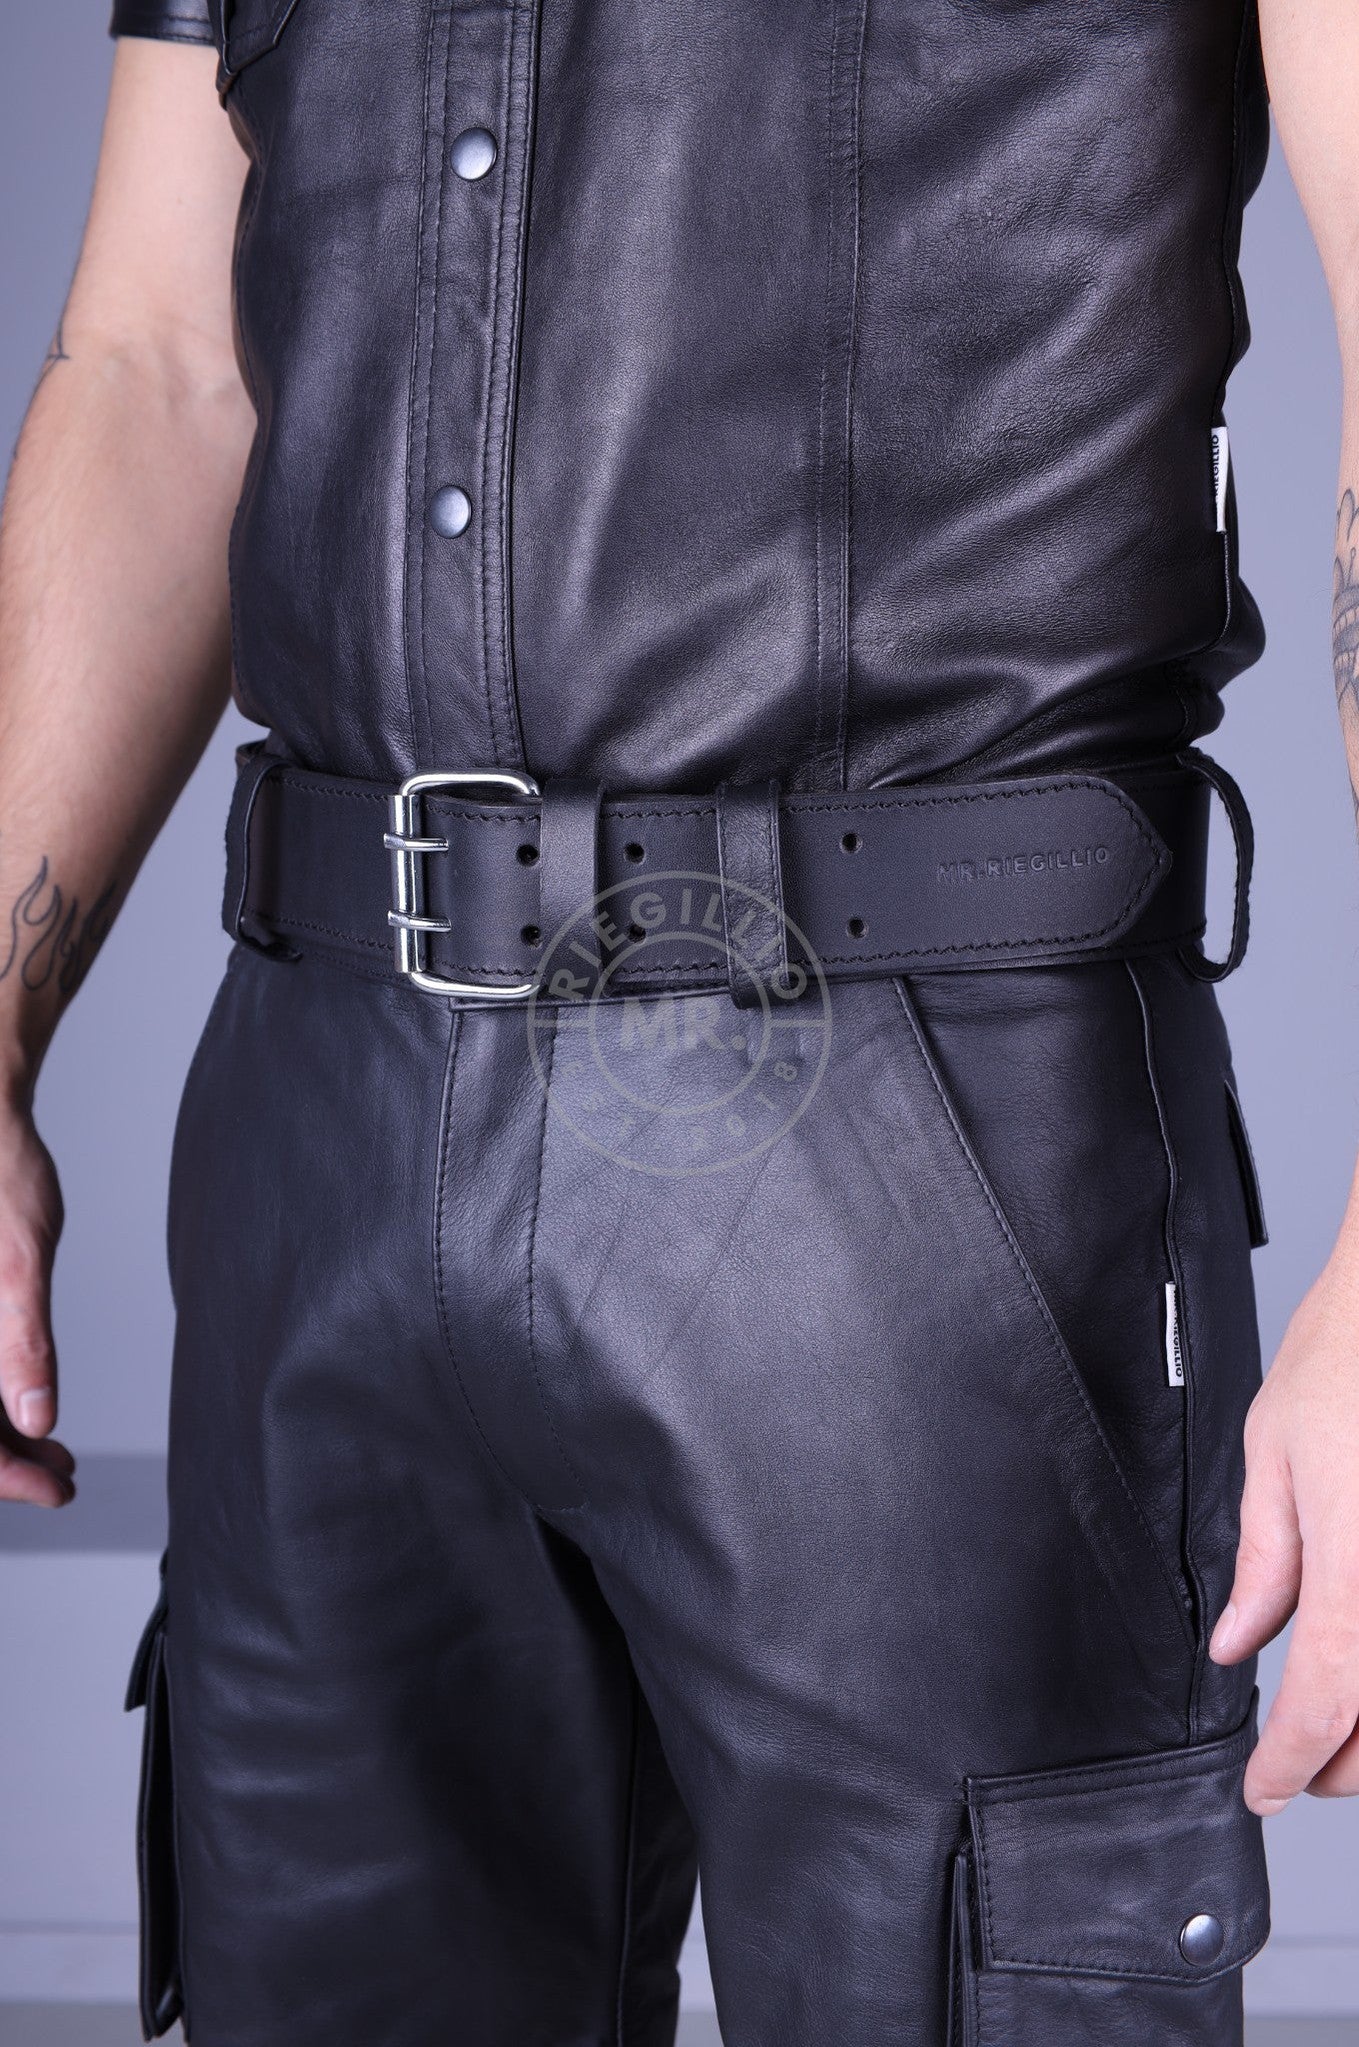 Black Leather Belt at MR. Riegillio